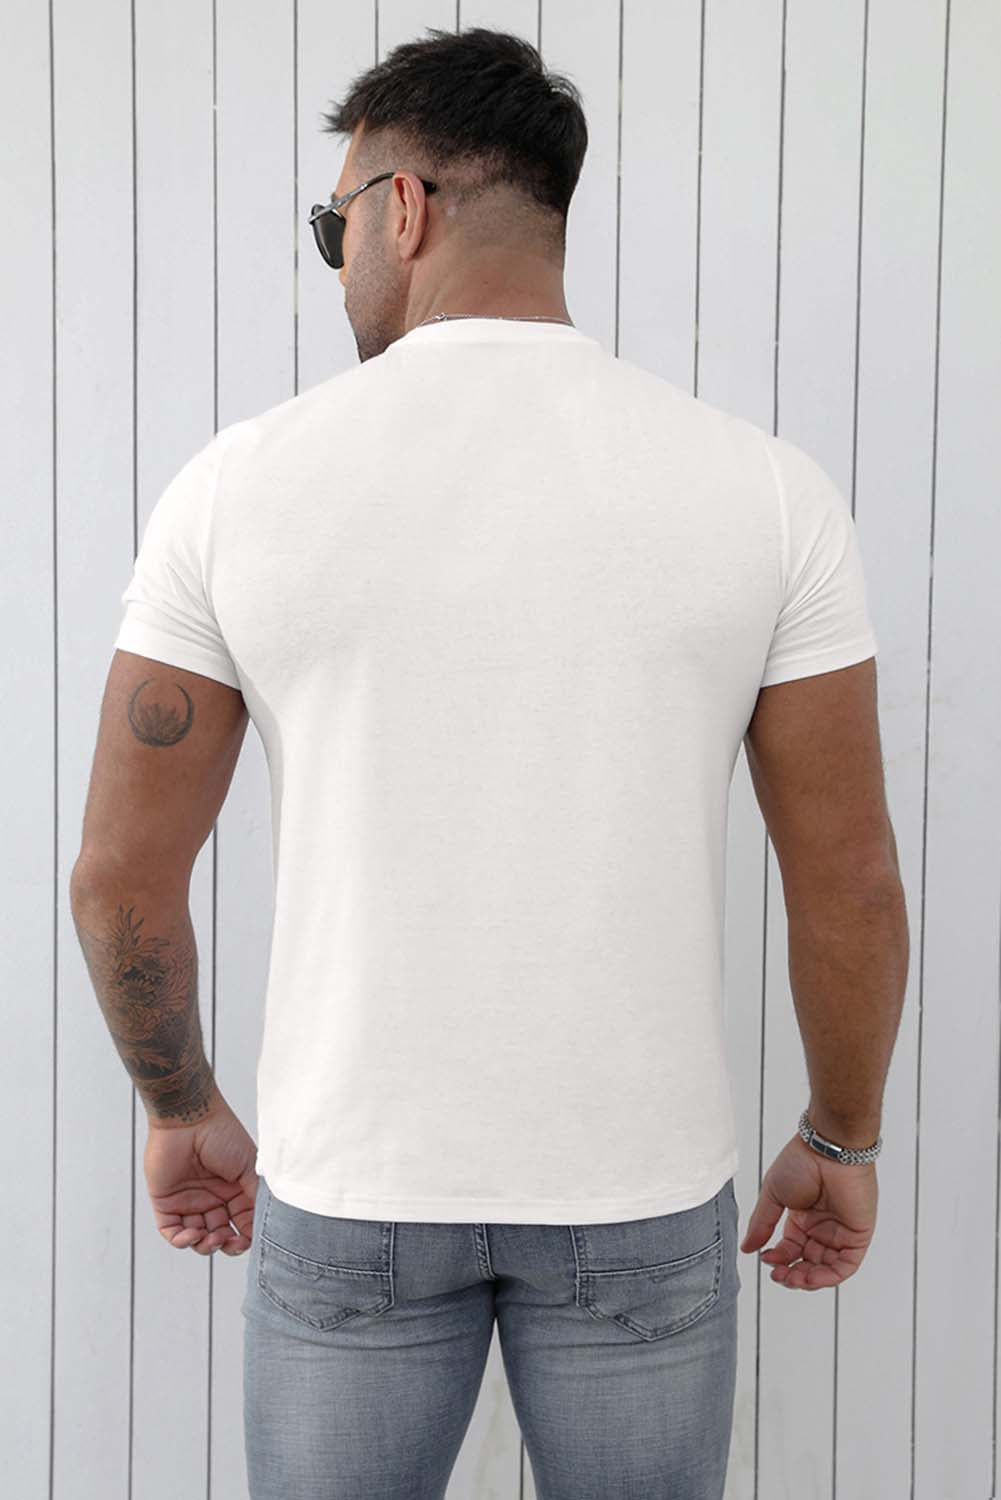 White See Beautiful Scenery Mountains Print T Shirt for Men Men's Tops JT's Designer Fashion